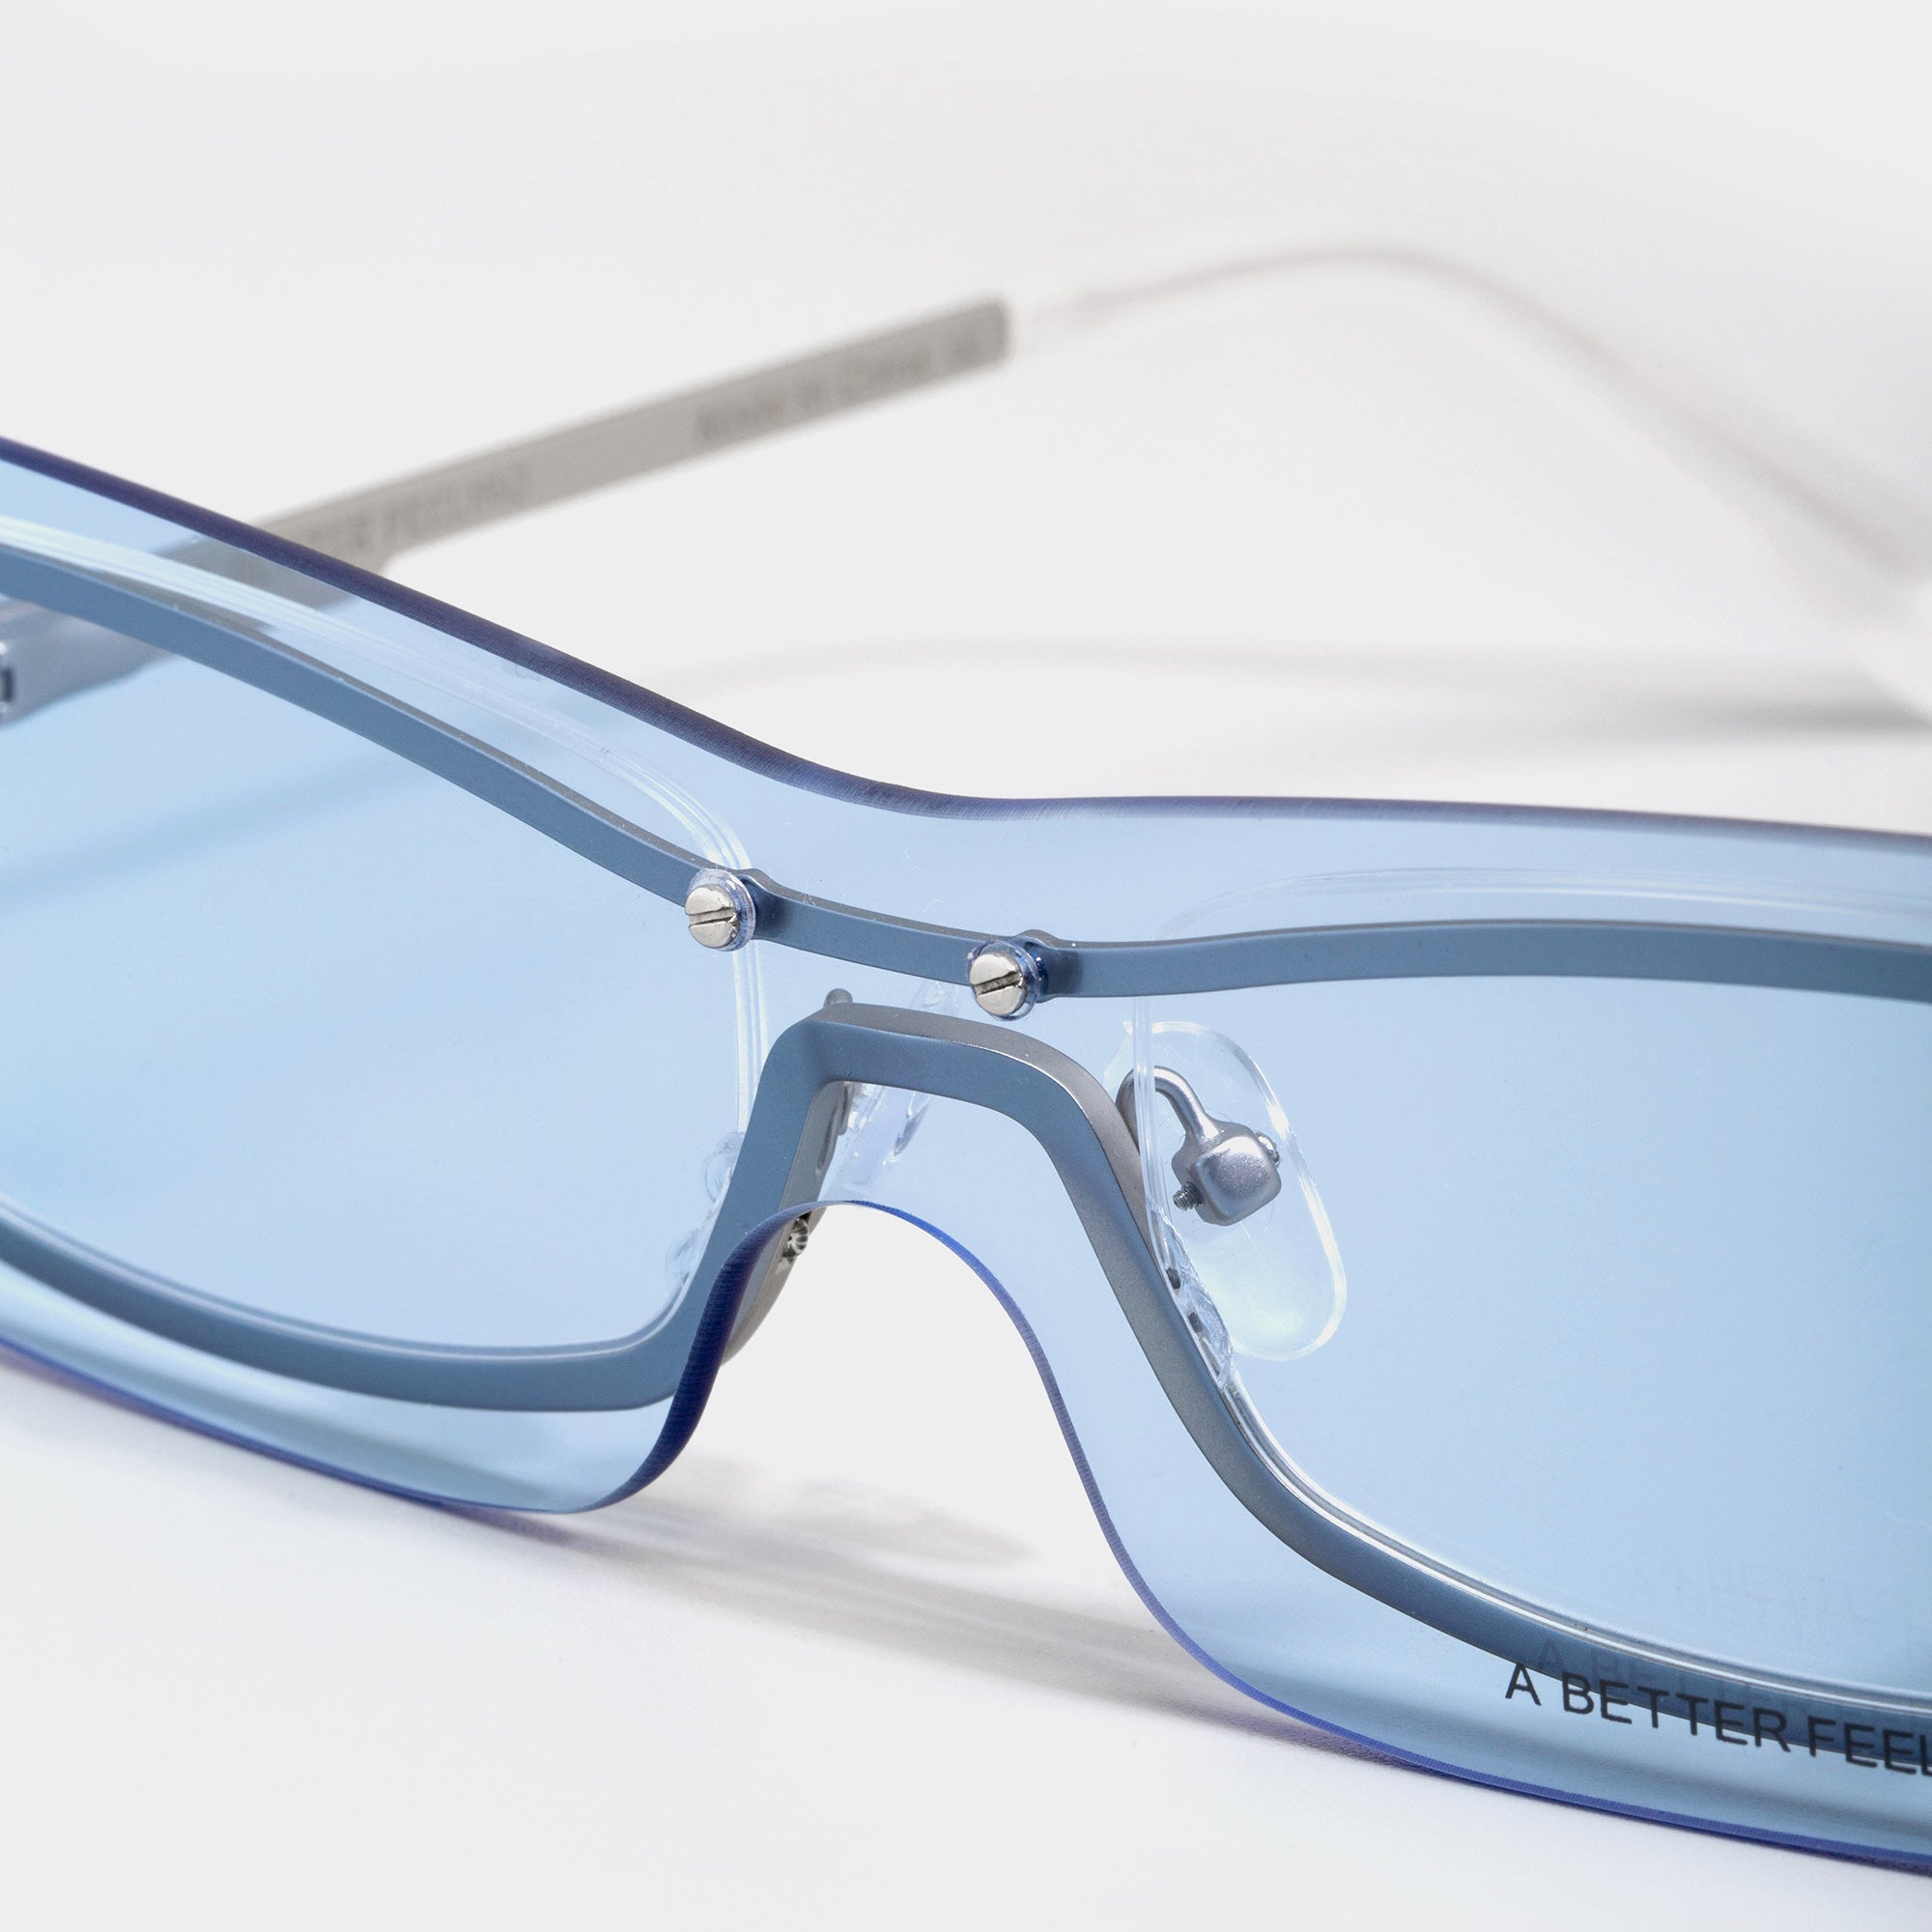 A BETTER FEELING ARCTUS OPTICAL Dual Lens Removable Sunglasses 